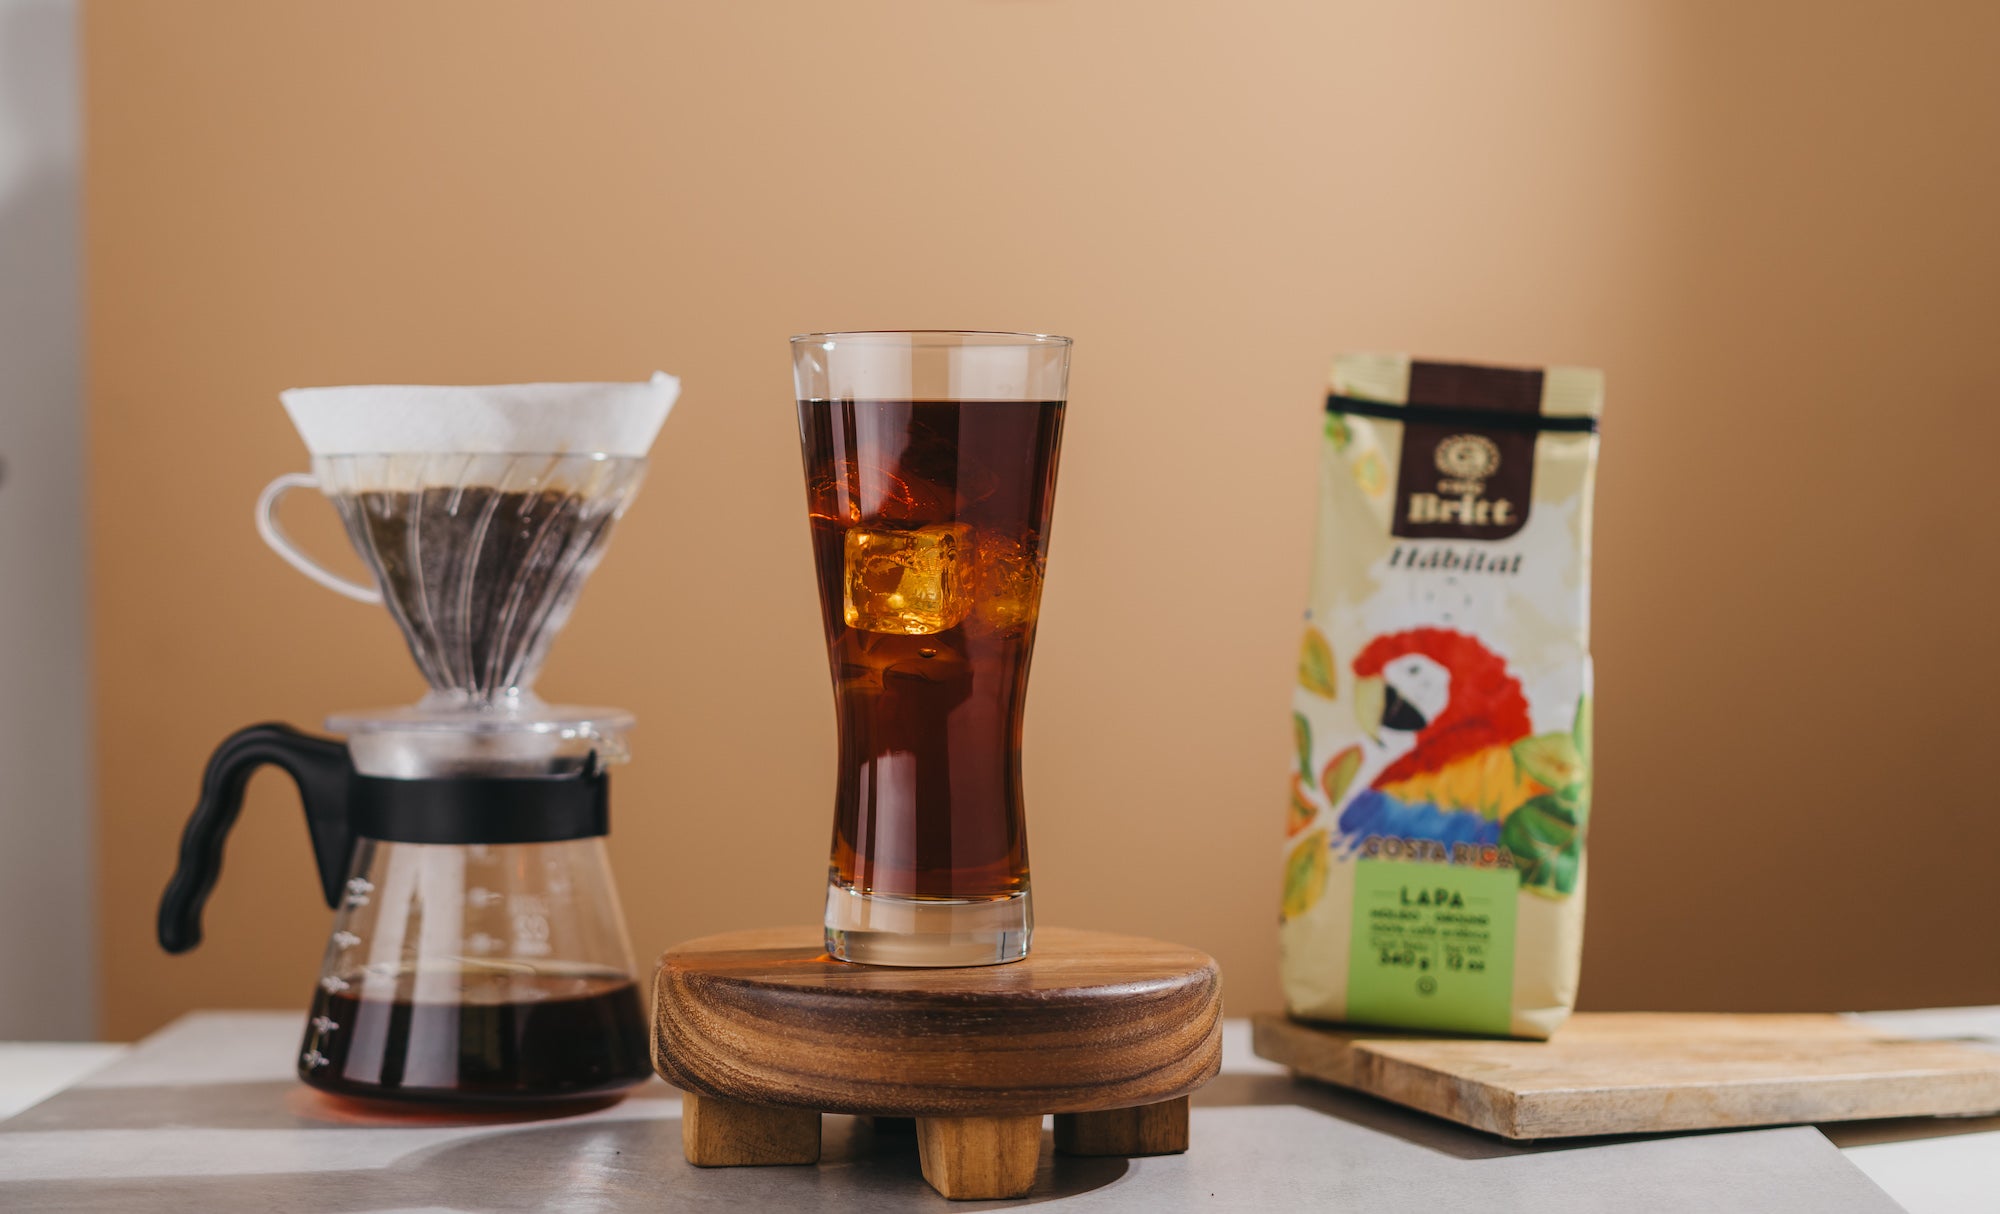 ICED COFFEE: CAFE BRITT'S BREWING SERIES